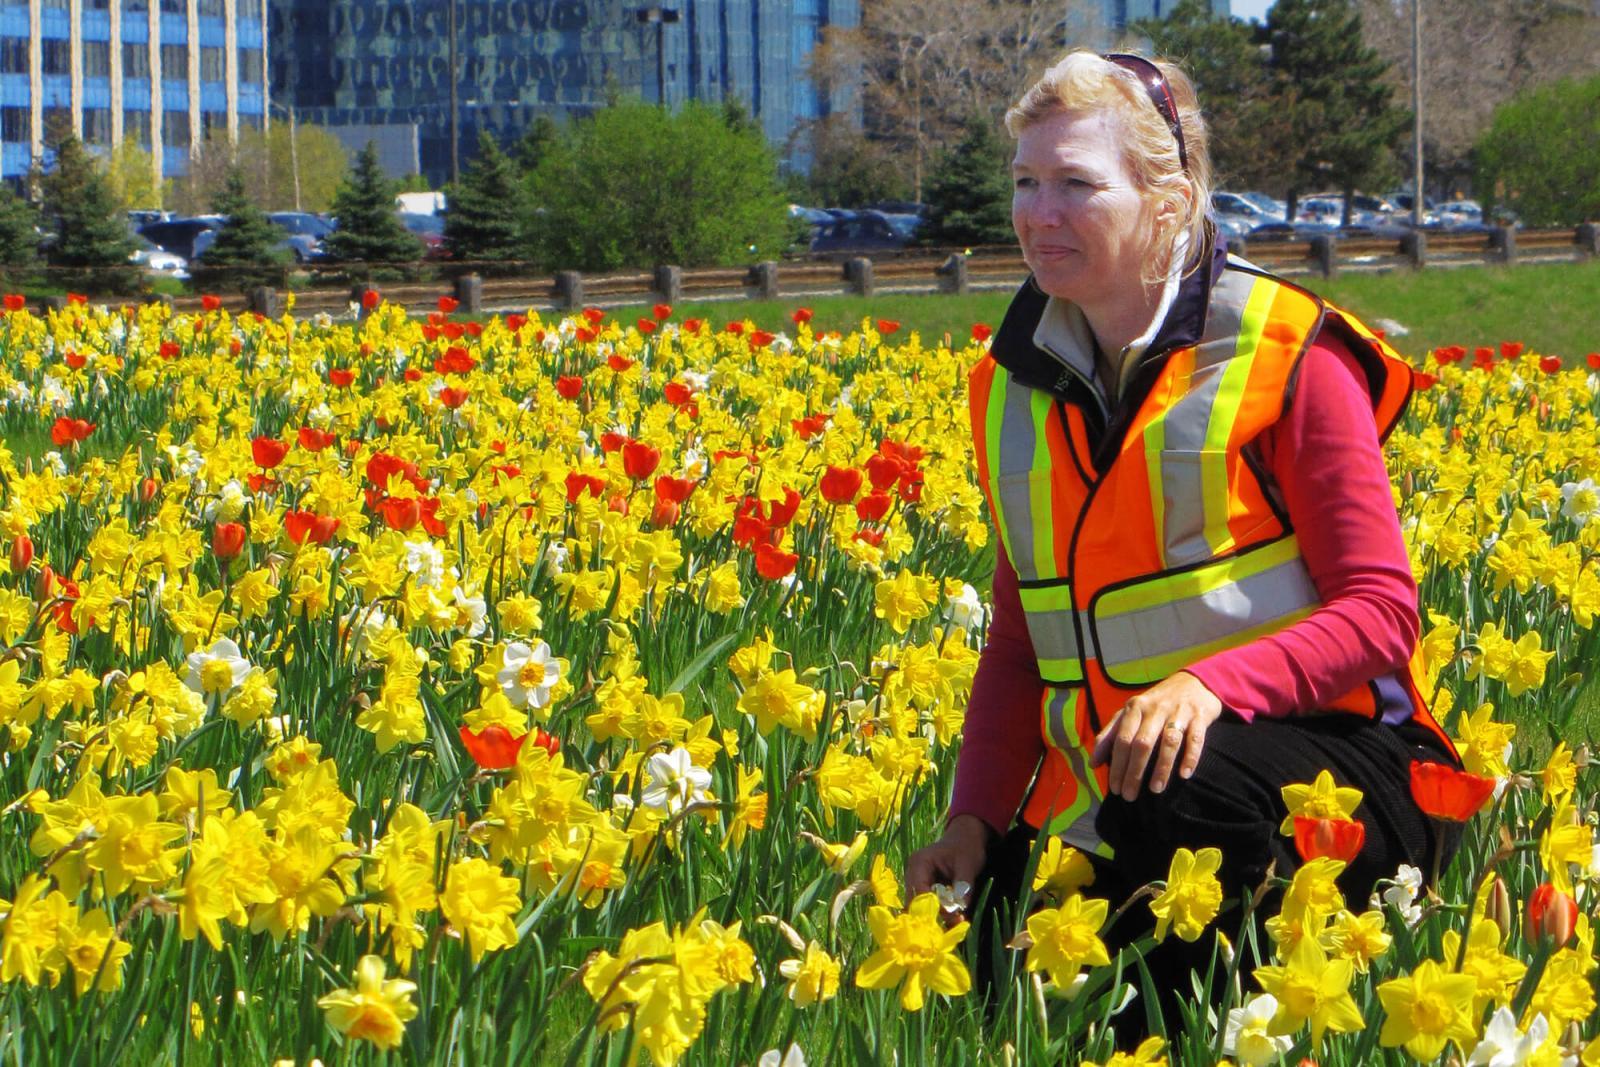 Caroline de Vries takes on the task of planting spring flowers beside busy highways.